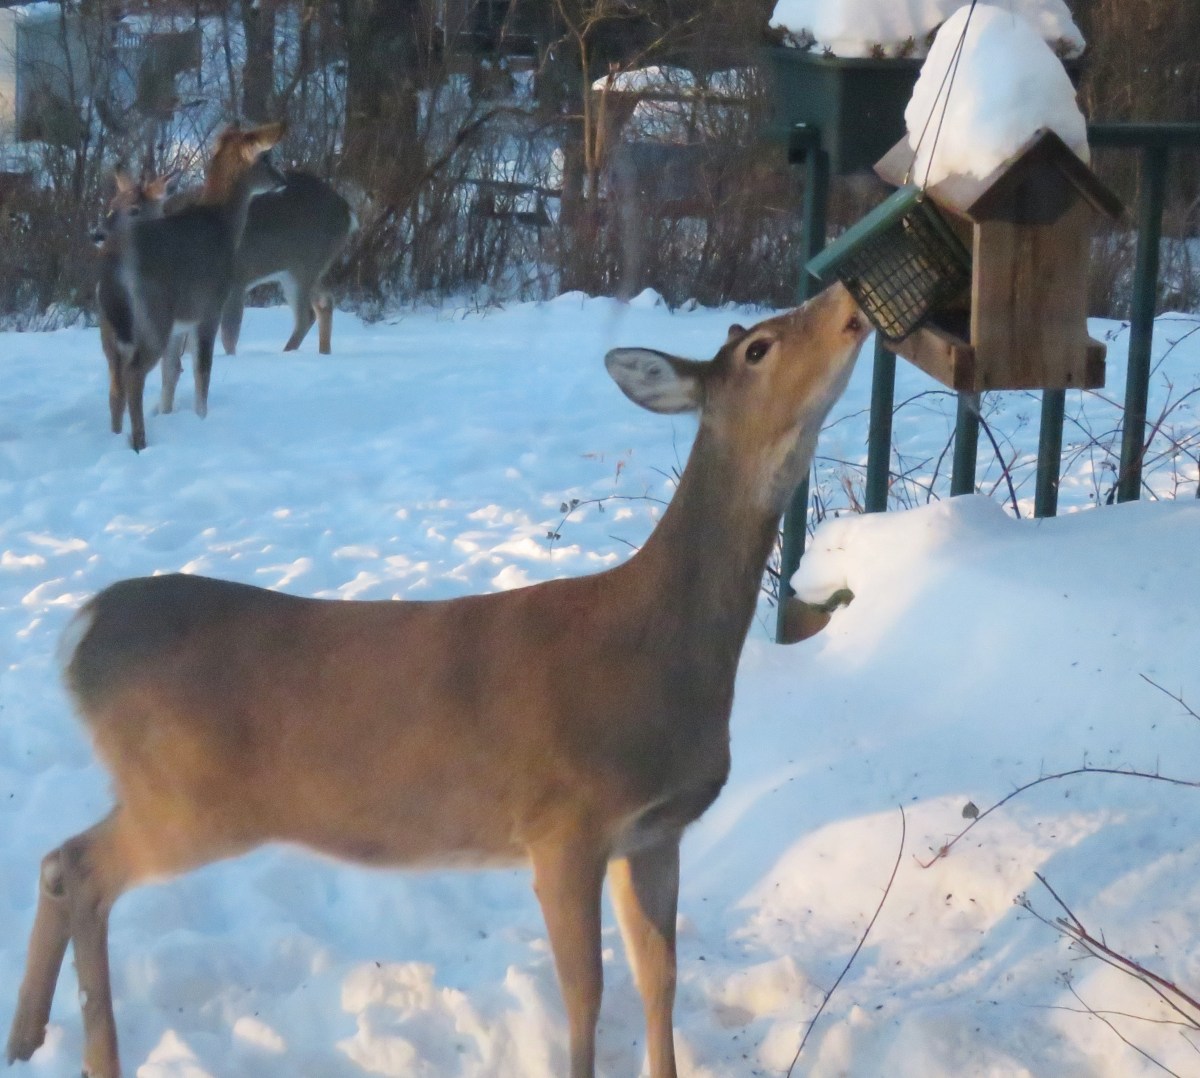 Deer eating from bird feeder